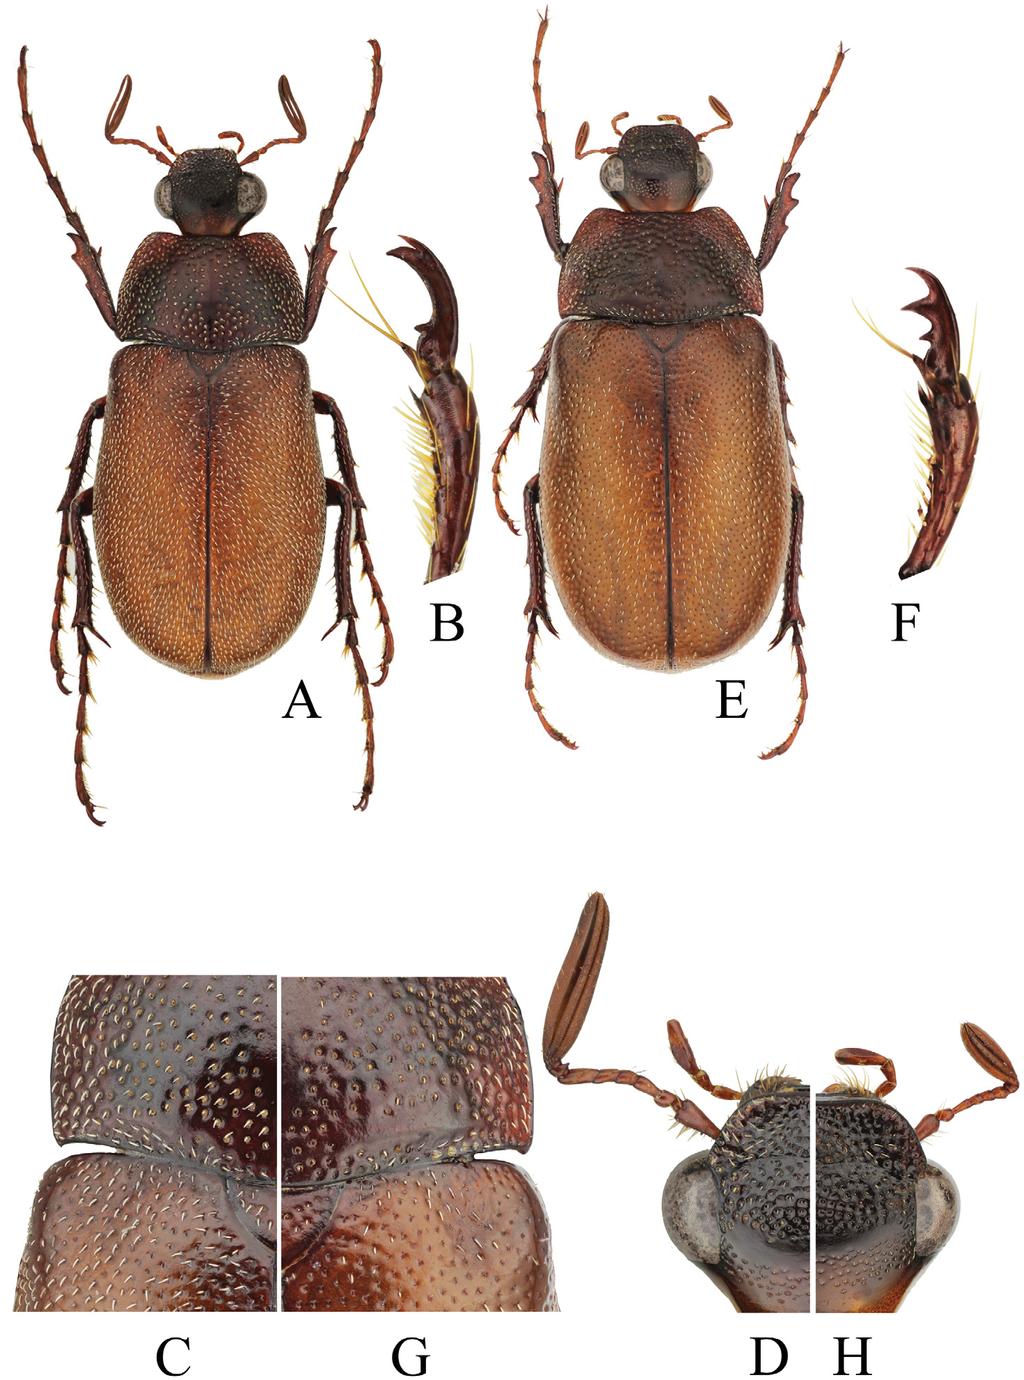 Acta Entomologica Musei Nationalis Pragae, 54 (supplementum), 2014 147 Figs 3A H. Canuschiza croton sp. nov., dorsal view: A D male, holotype, body length 13.